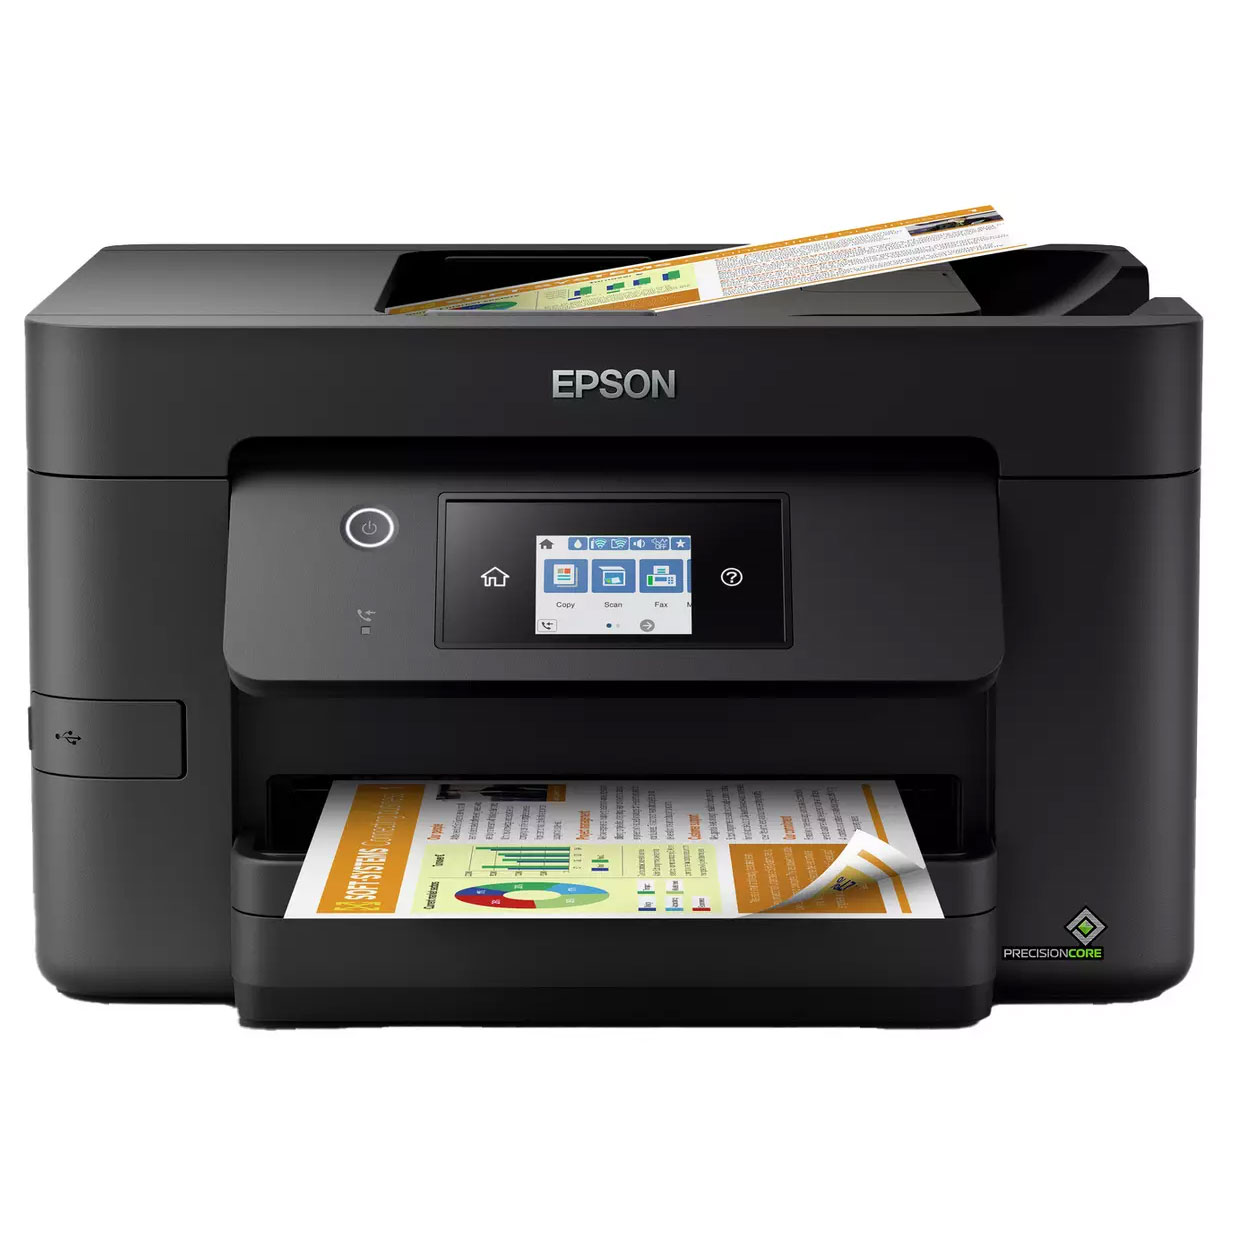 Epson WorkForce Pro WF-3820DWF All-In-One Wireless Printer, Black. £120 RRP